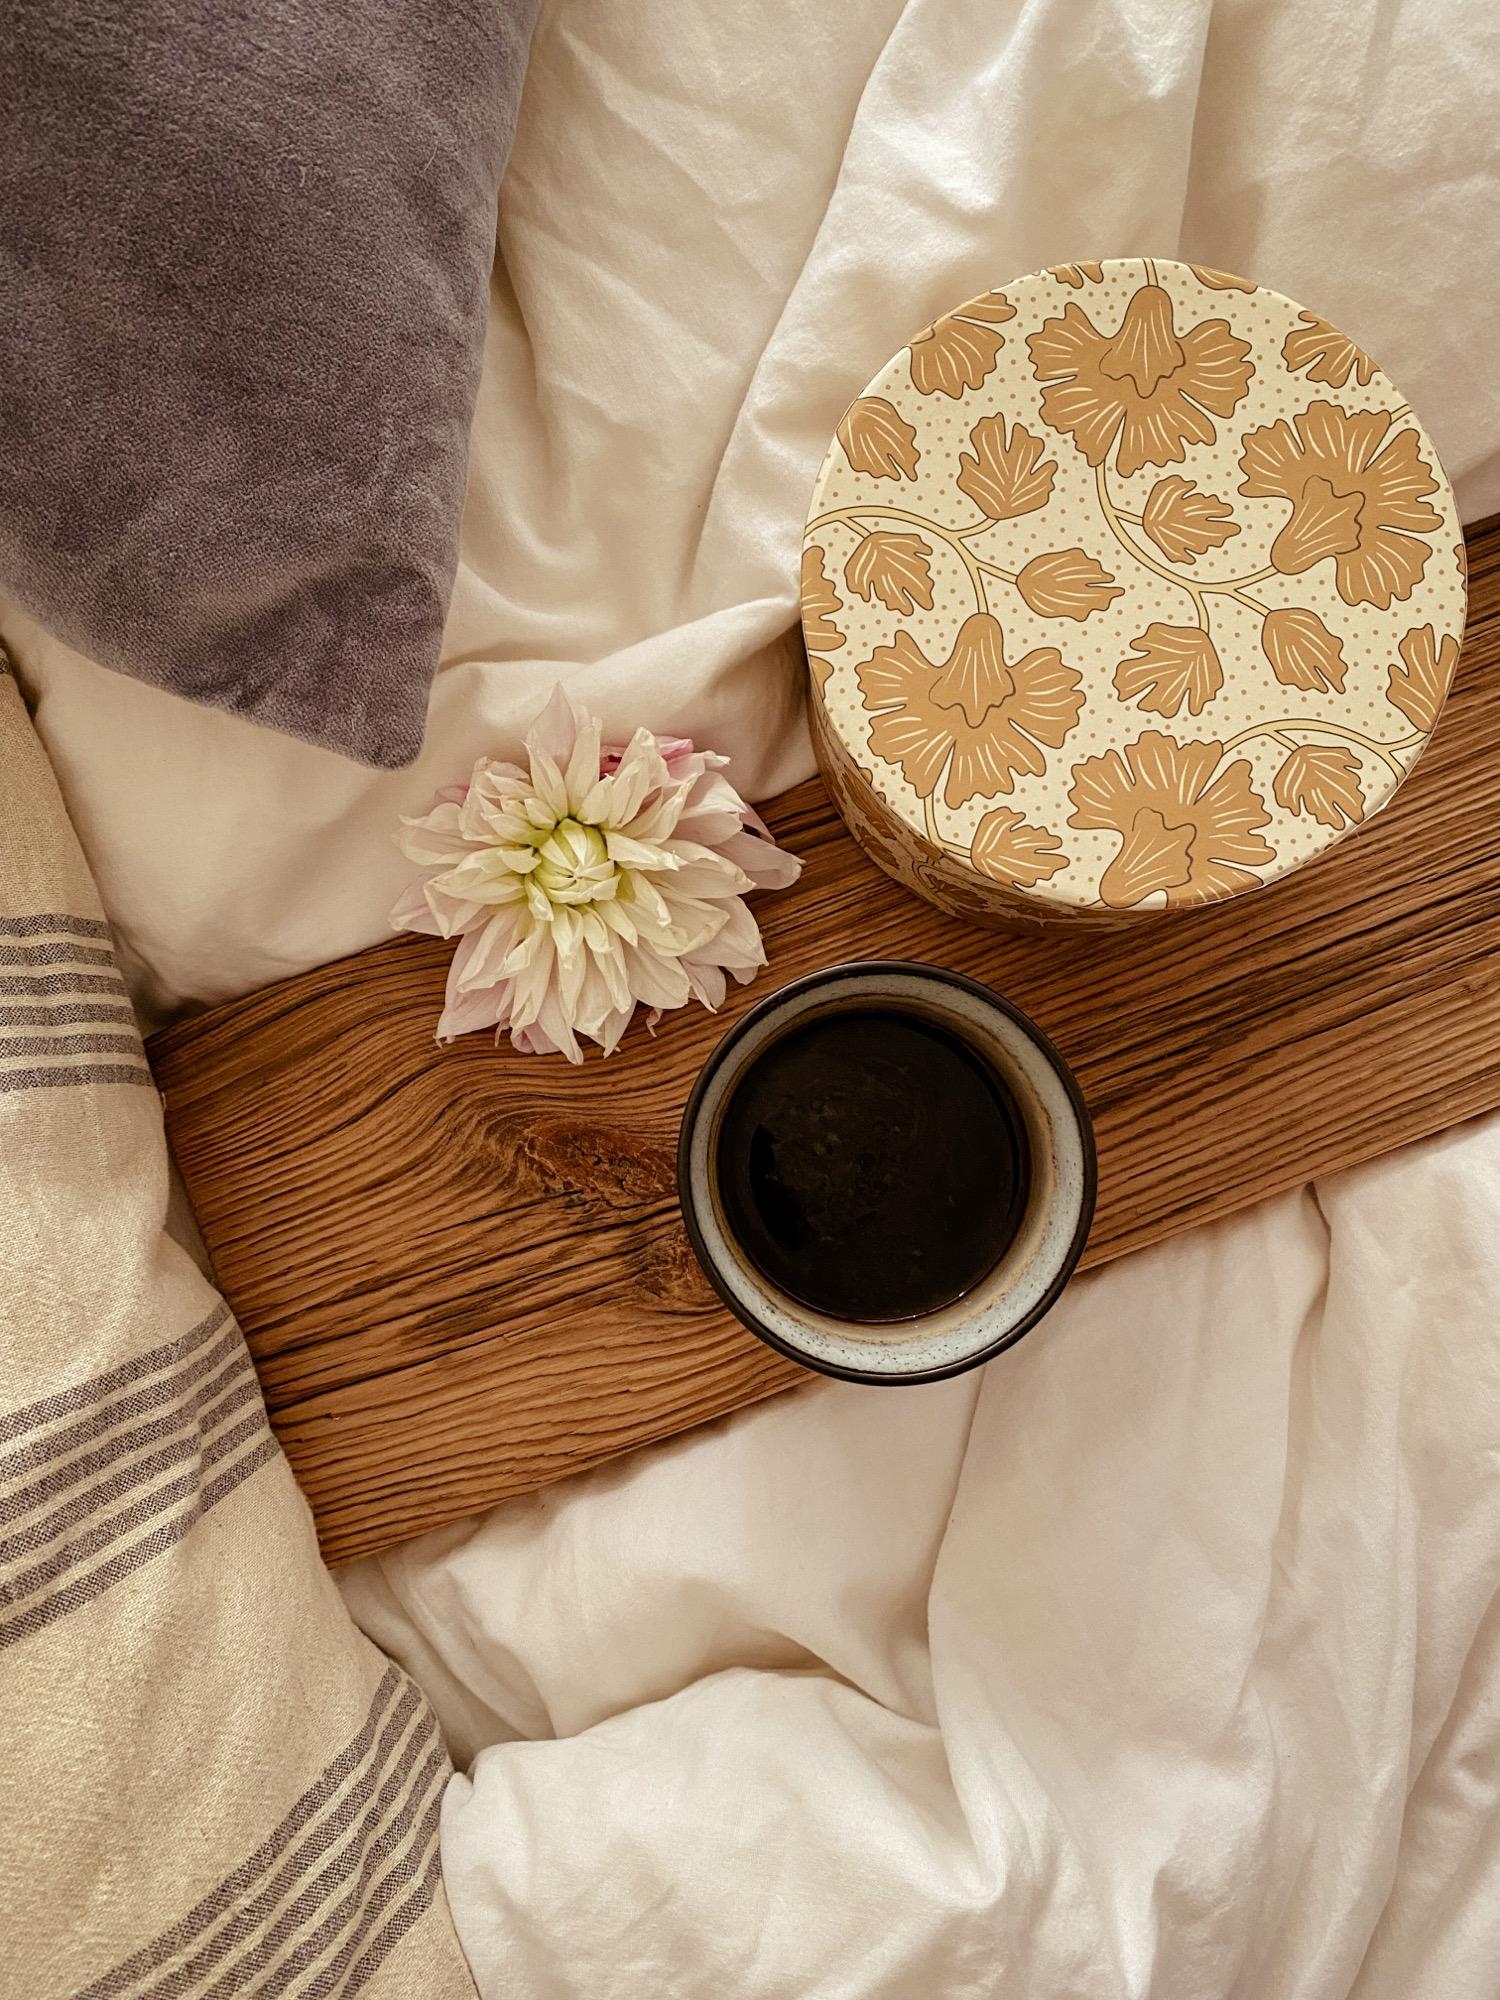 Coffeetime
#coffeelover#mybedroom#dekoliebe#cozysundays#sleepingroomdecor 